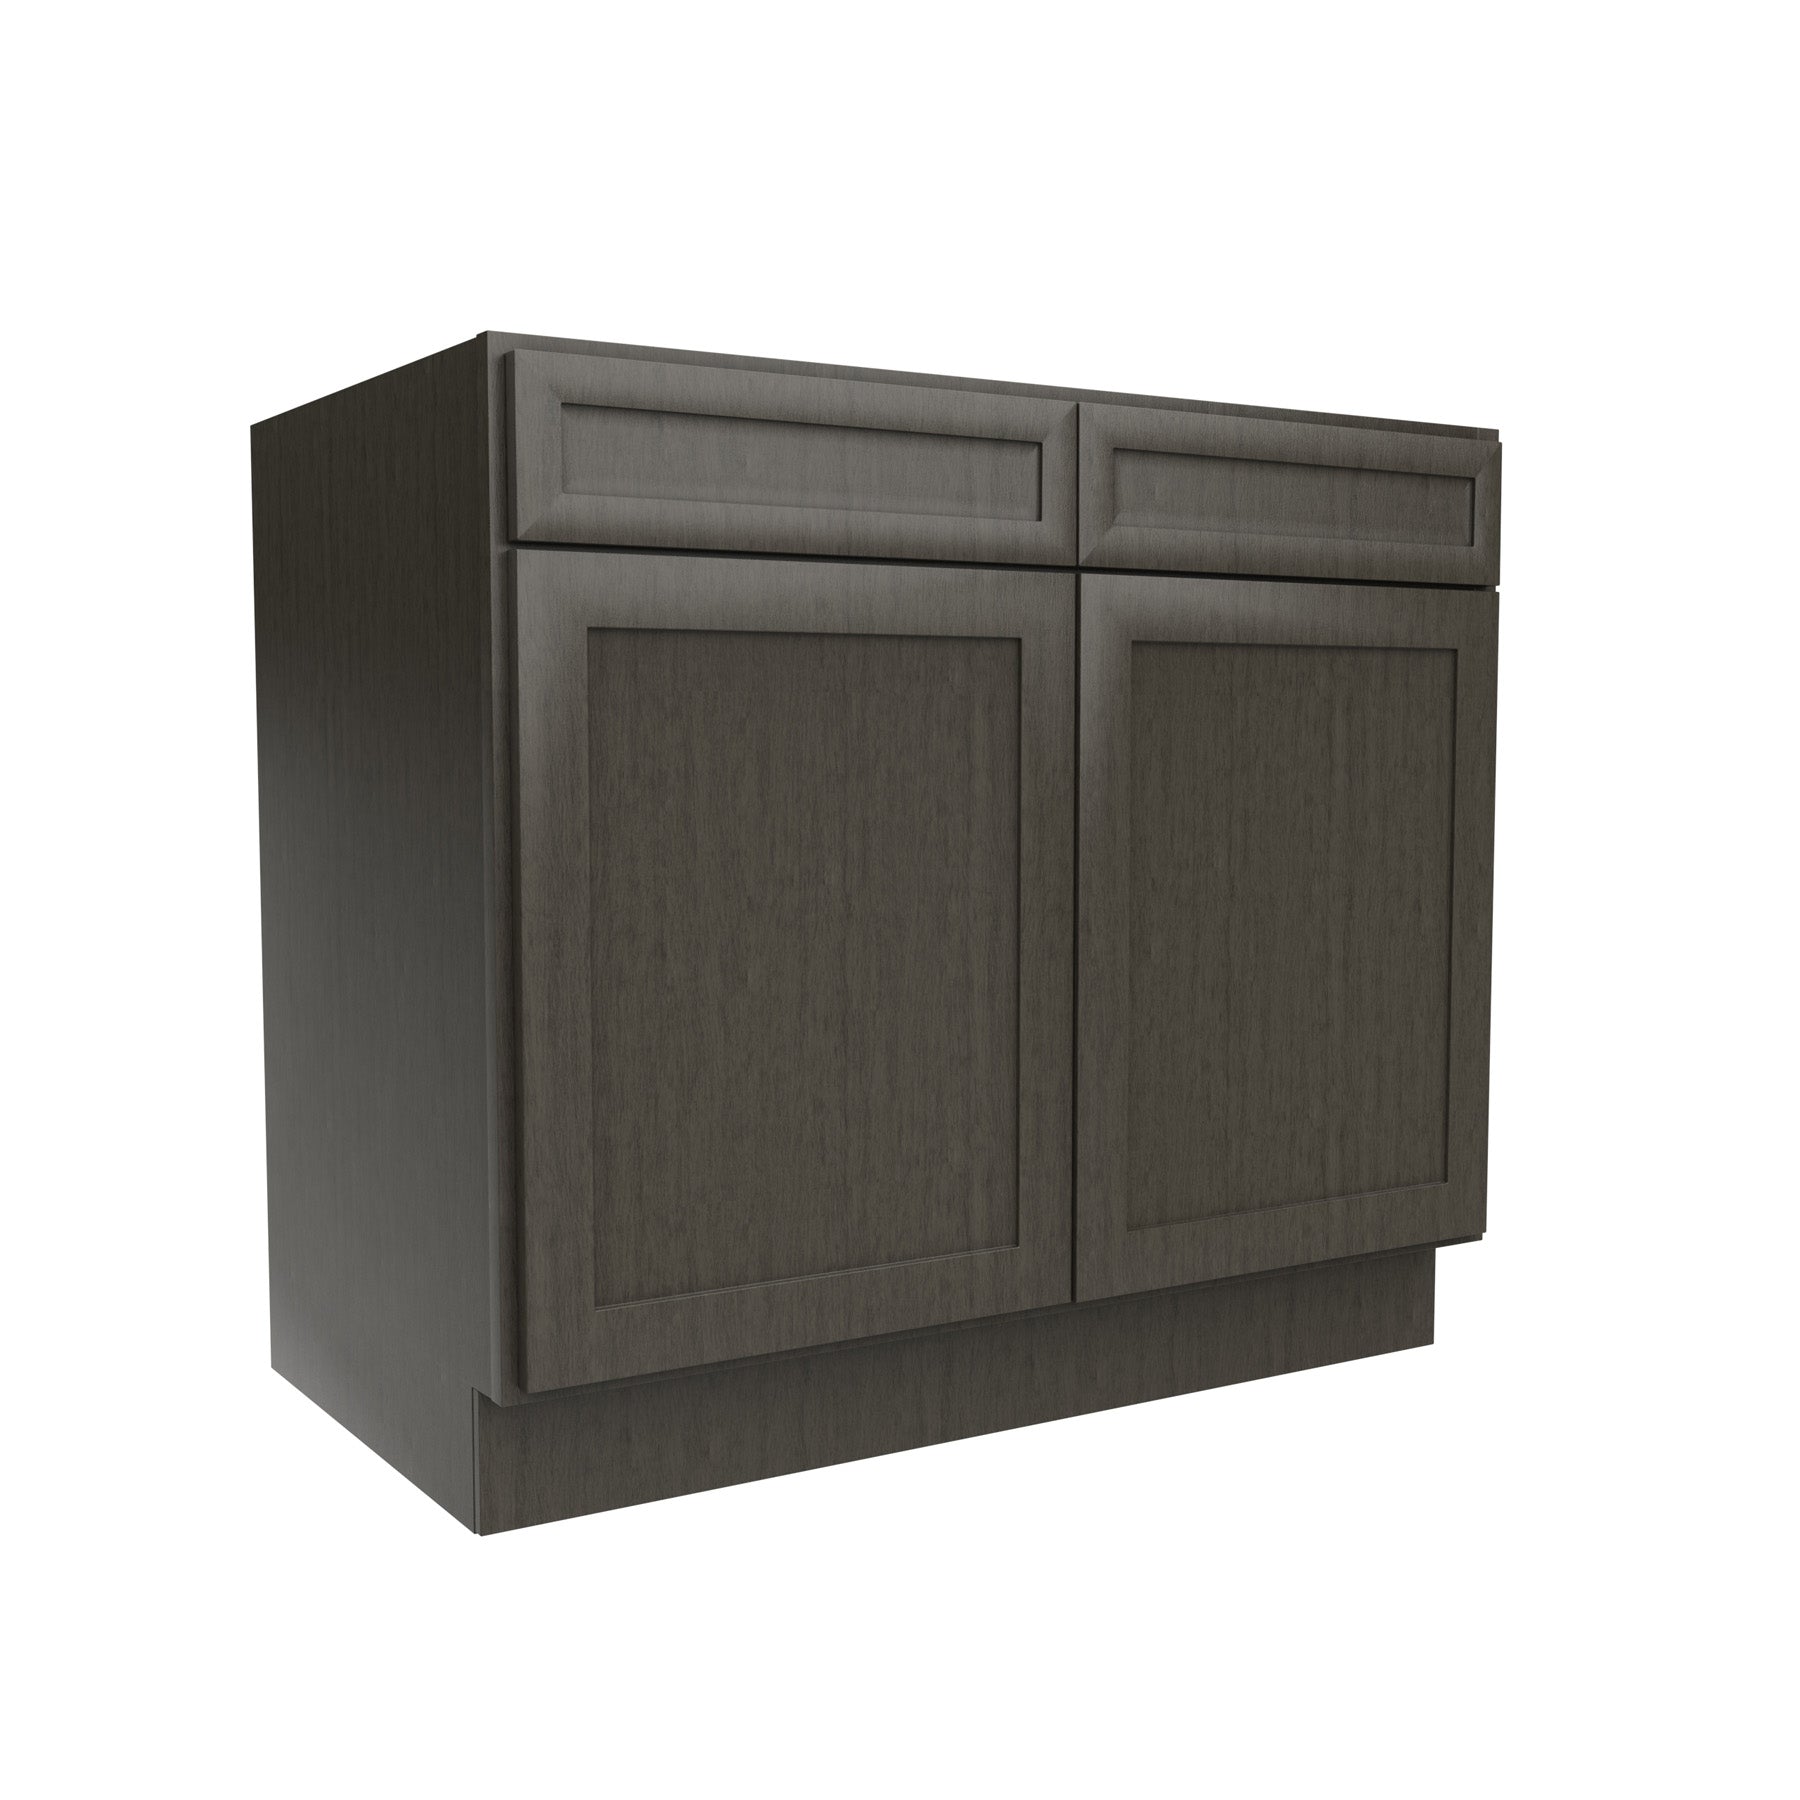 RTA - Elegant Smoky Grey - Double Drawer Front 2 Door Sink Base Cabinet | 39"W x 34.5"H x 24"D